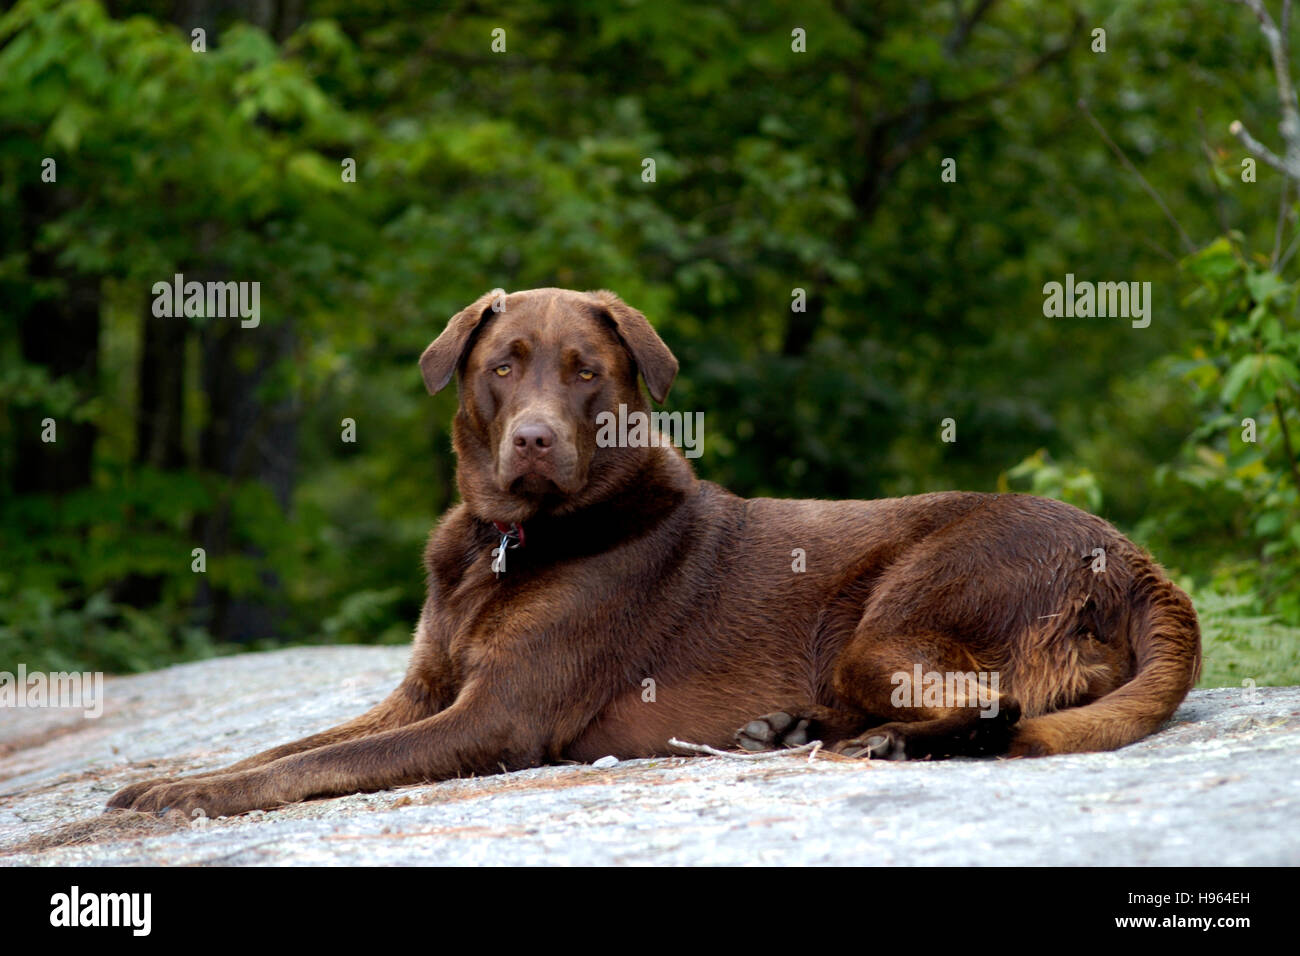 Chocolate Labrador Retriever lying down Stock Photo